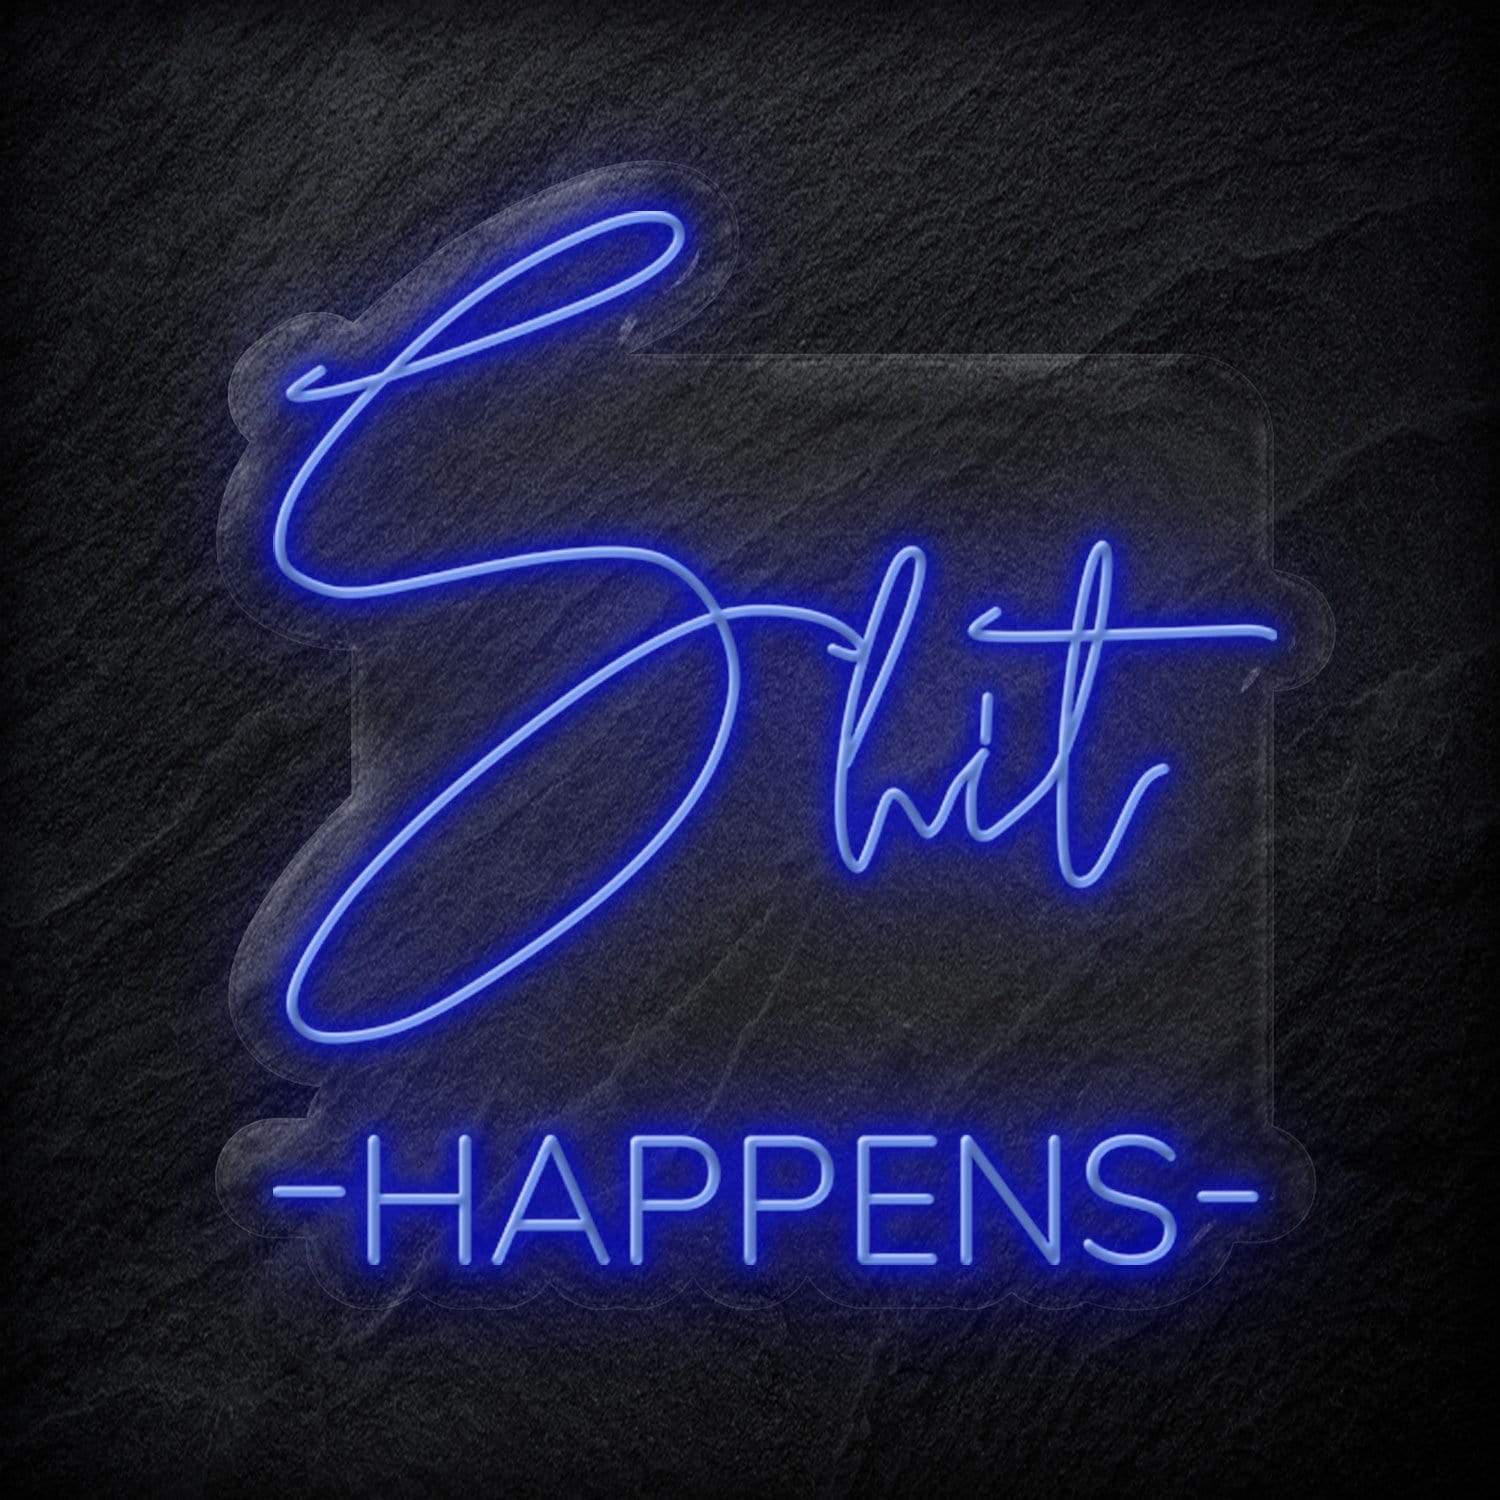 "Shit Happens" LED Neon Schild - NEONEVERGLOW